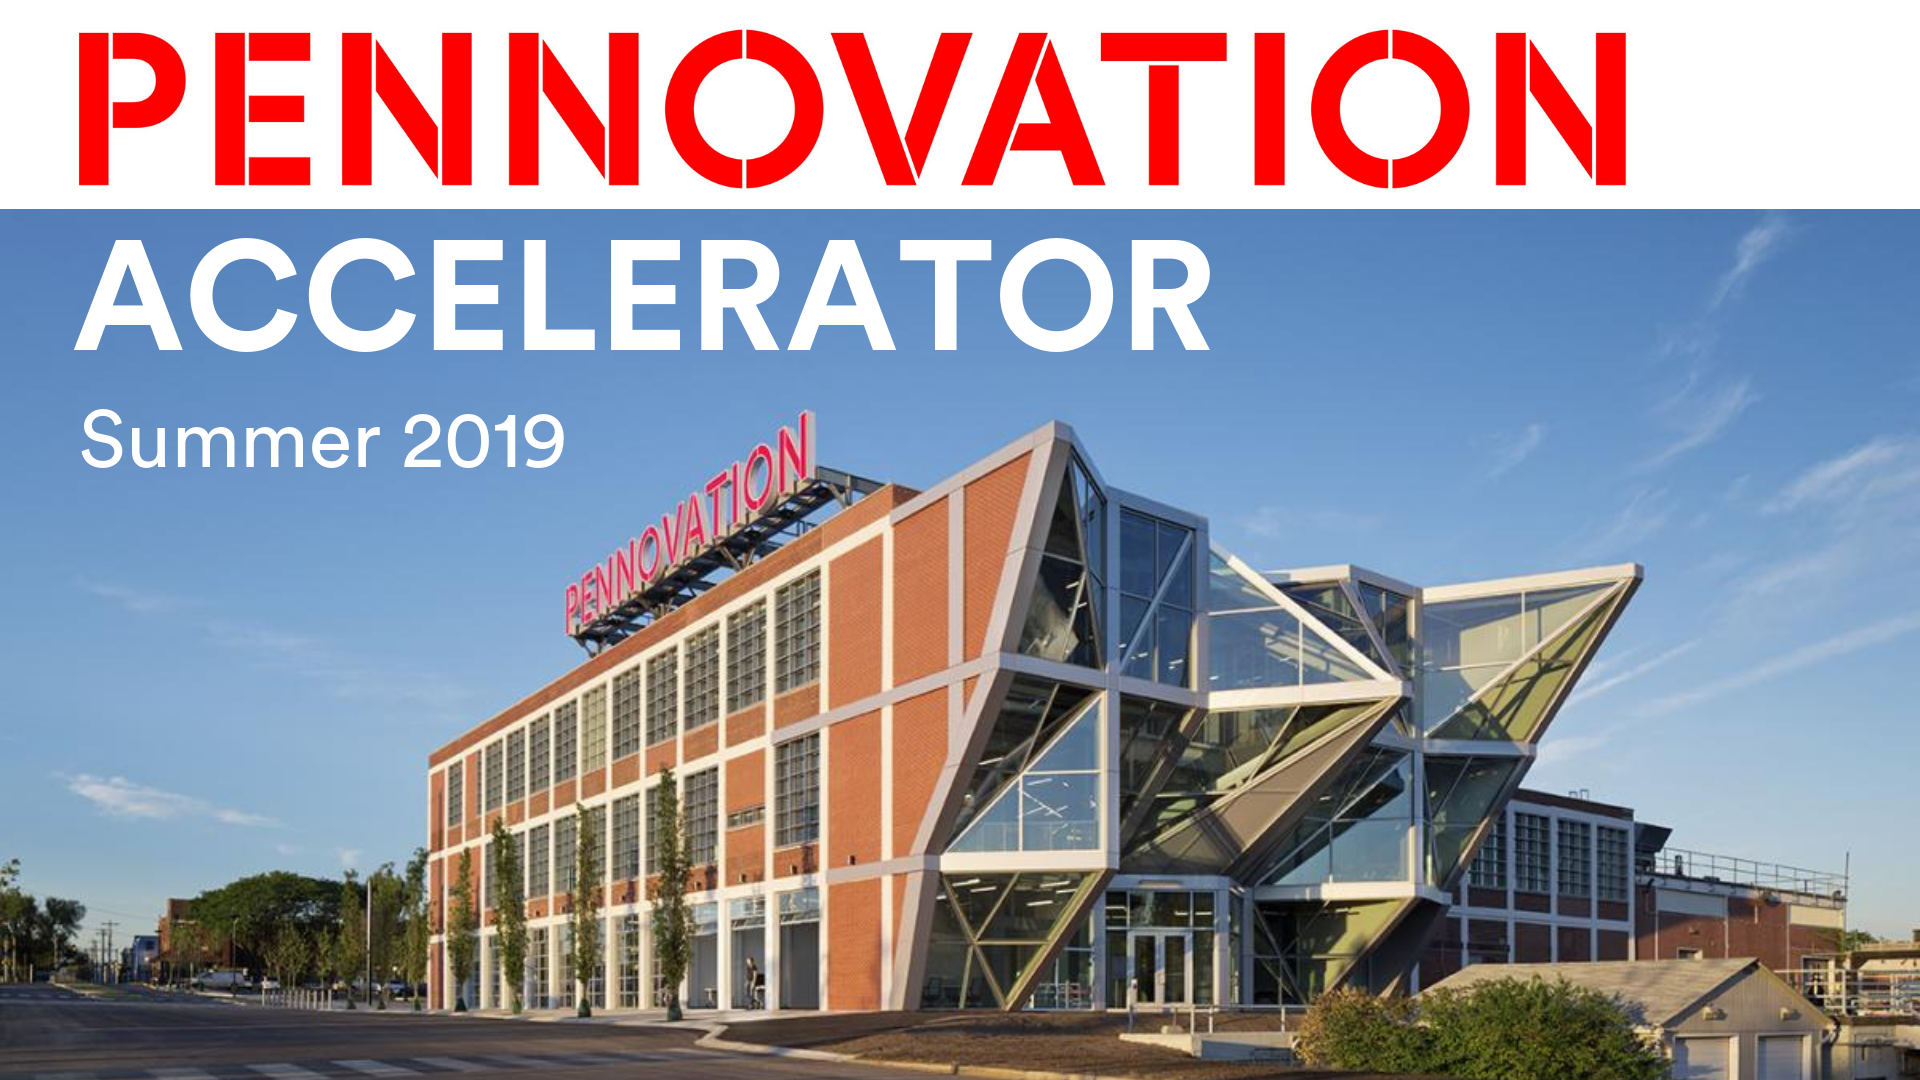 Pennovation Accelerator Summer 2019 